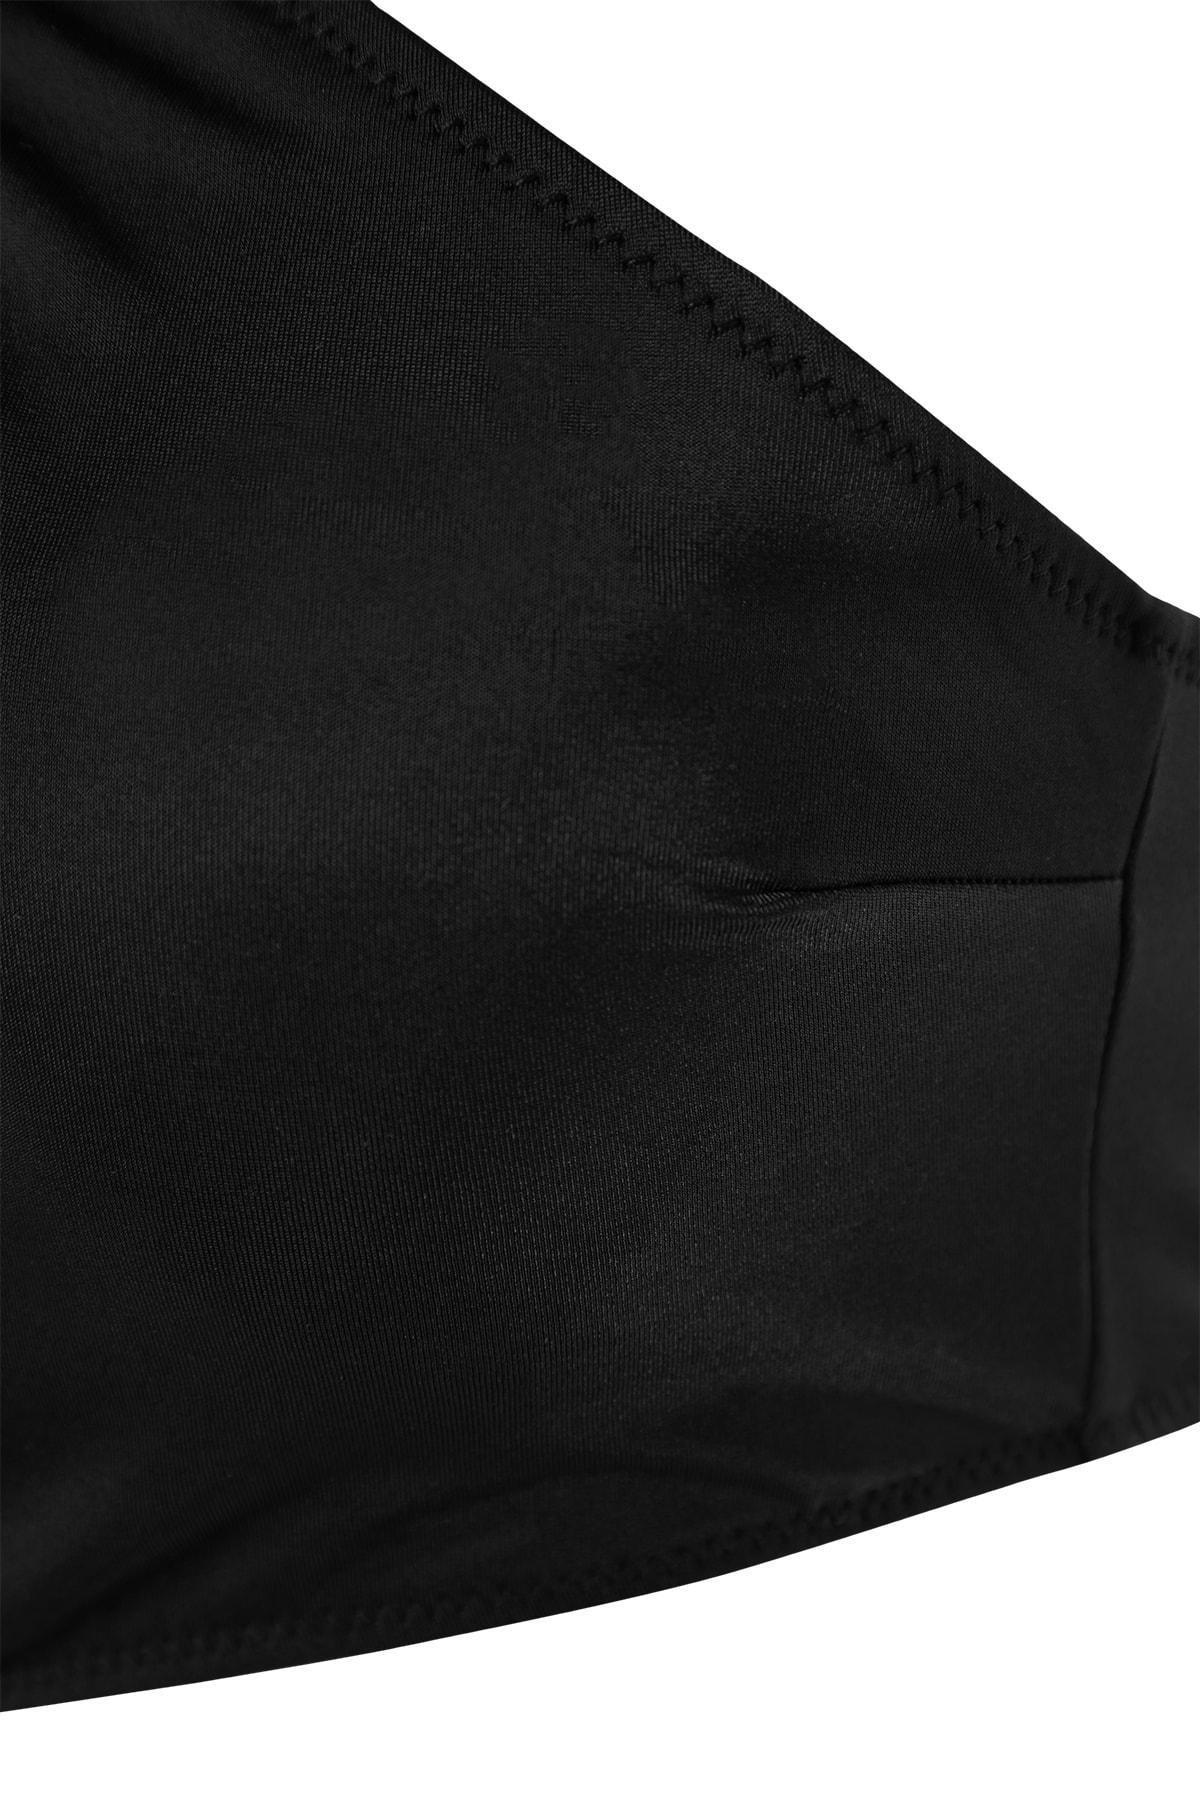 Trendyol - Black Accessory Detailed Swimsuit